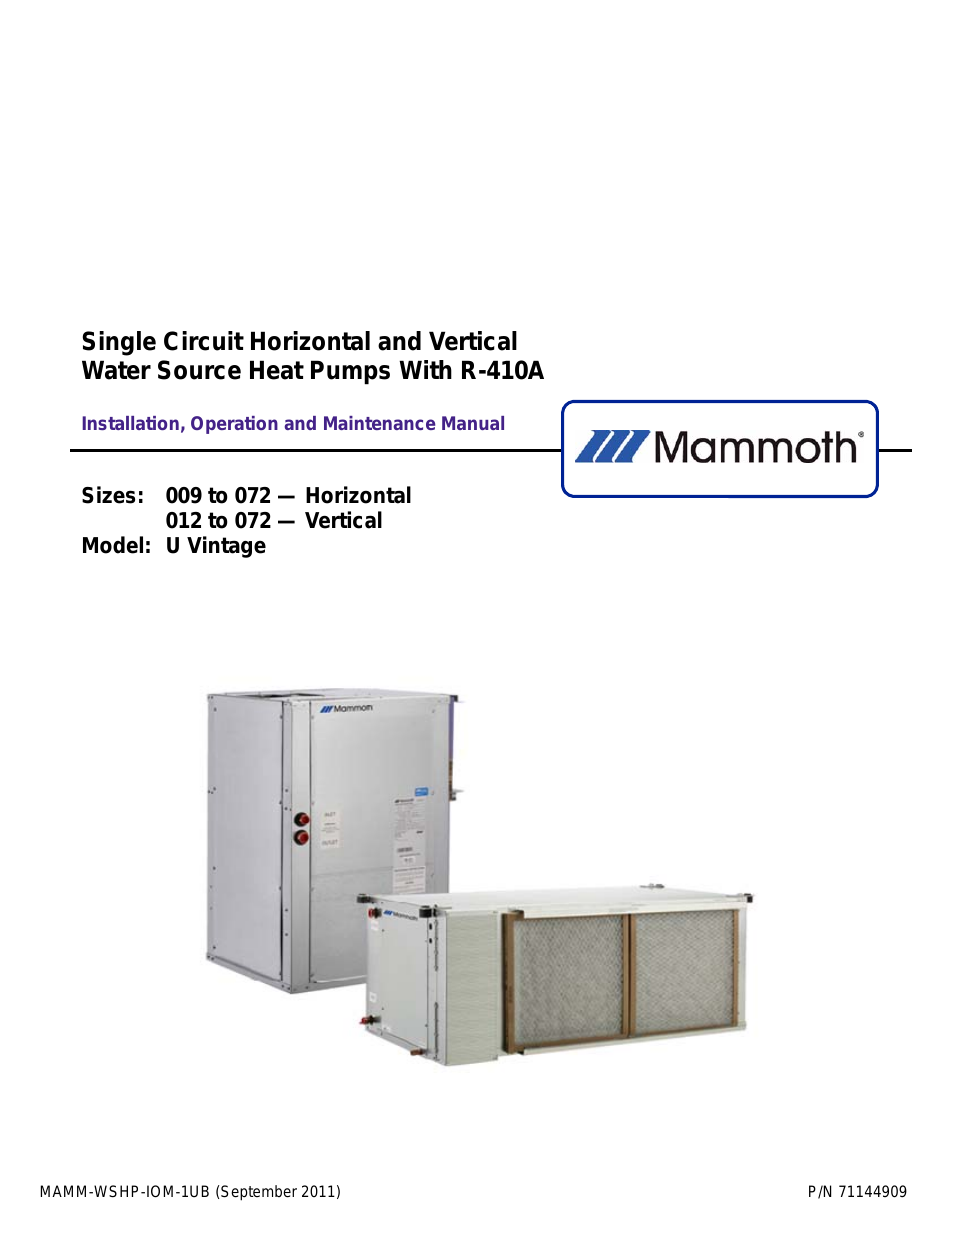 3/4 to 5 Tons: Single Circuit Horizontal and Vertical (U-Vintage)